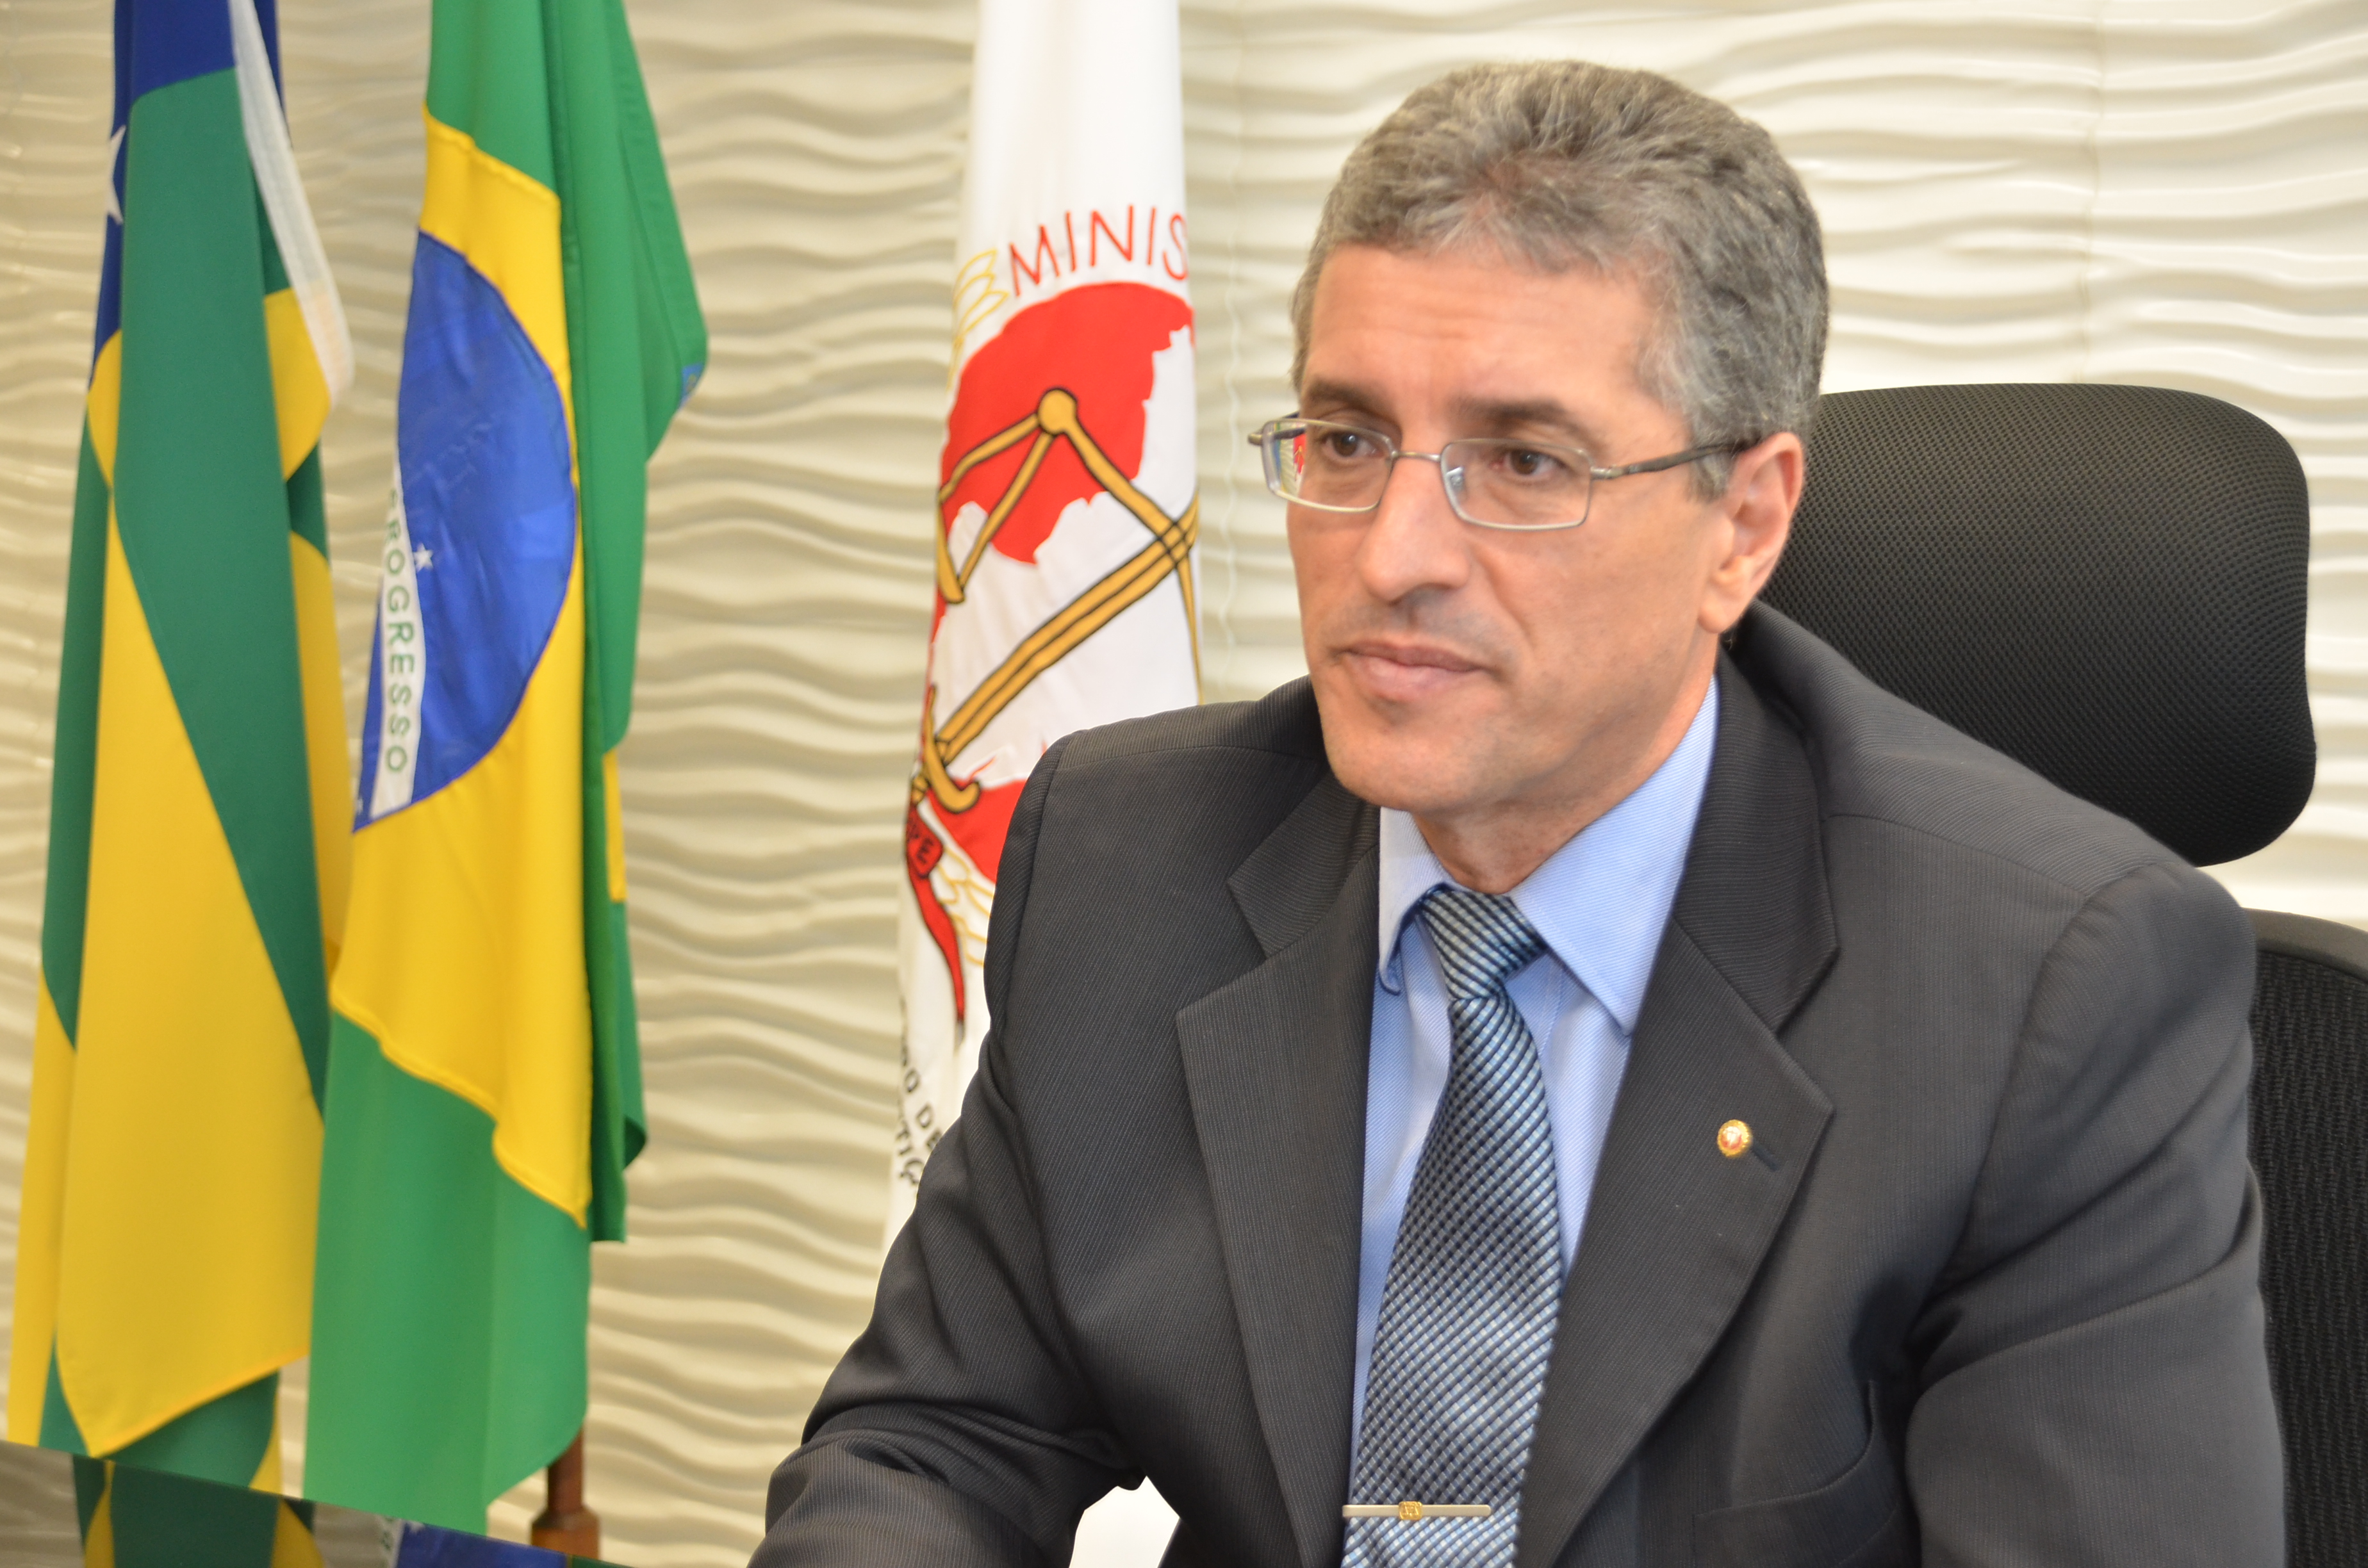 Orlando Rochadel é reconduzido ao cargo de conselheiro nacional do Ministério Público